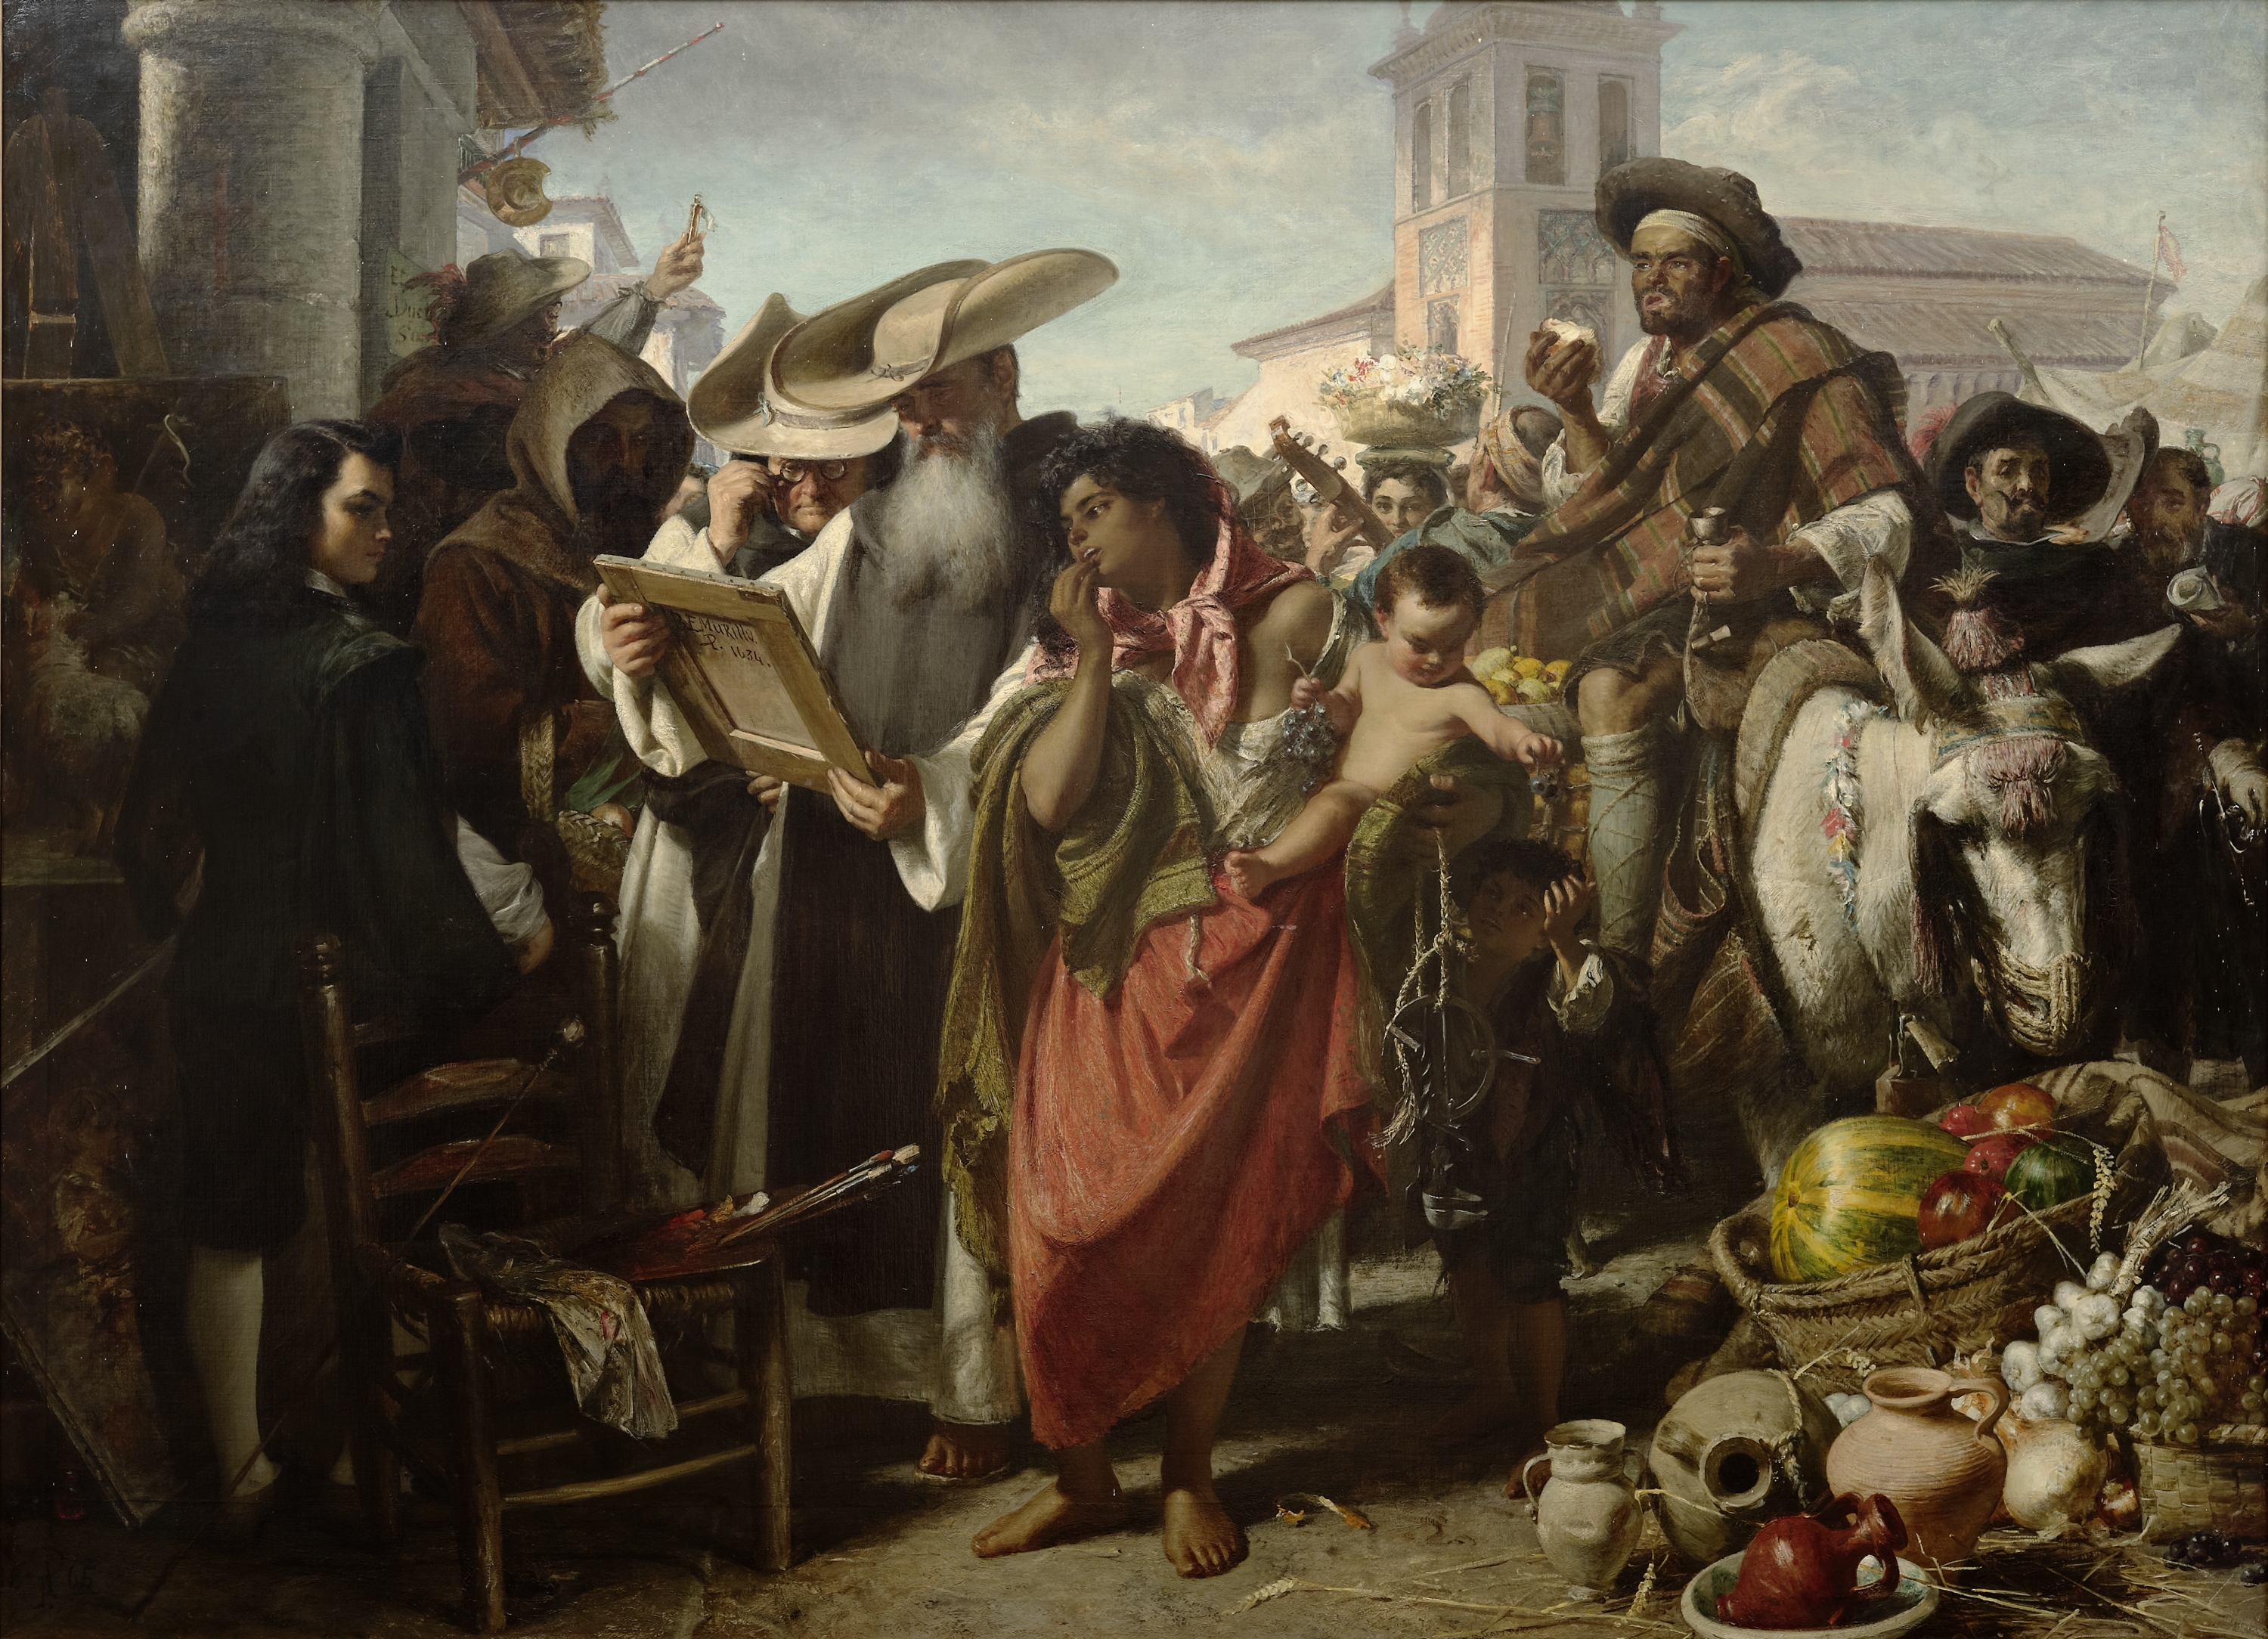 La temprana carrera de Murillo, 1634